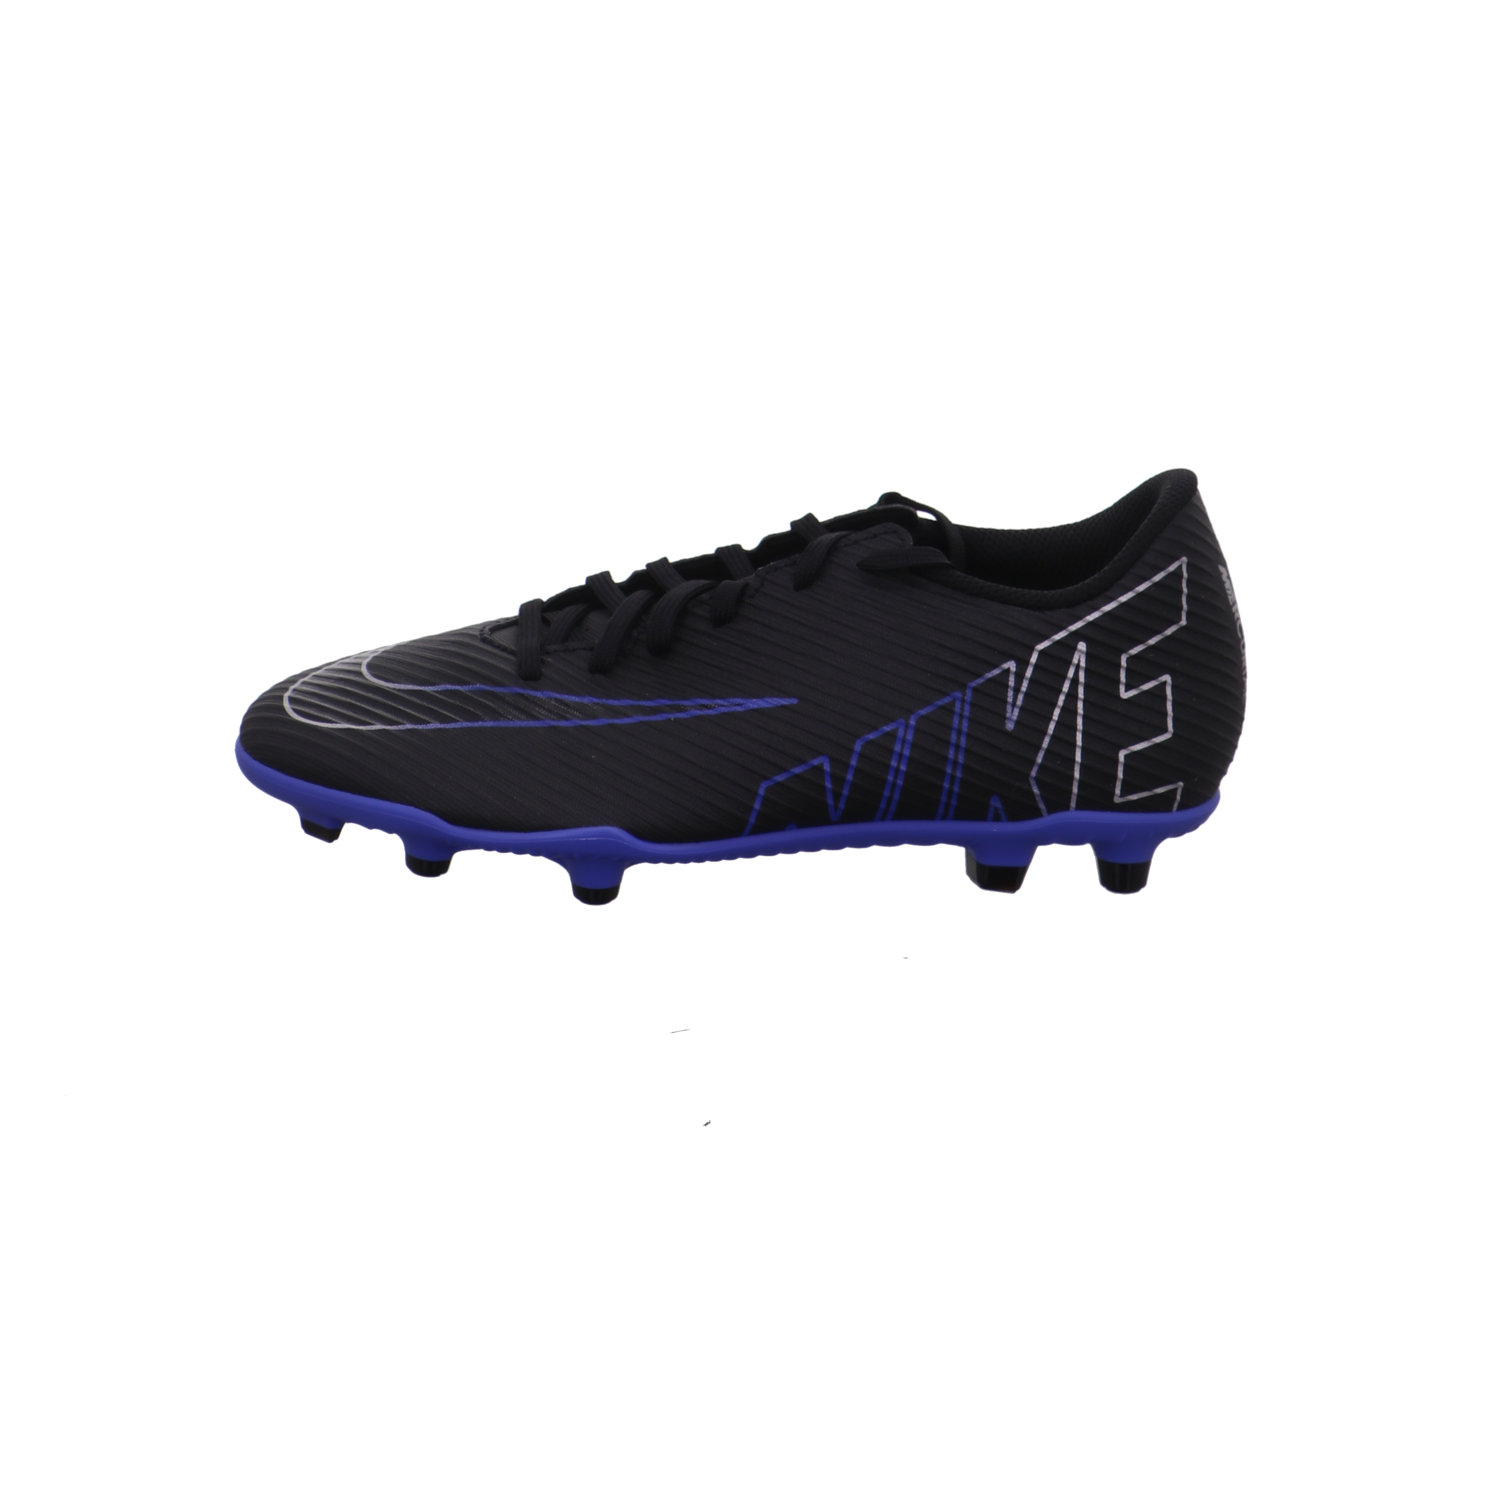 Nike Fußballschuhe schwarz kombi Bild1